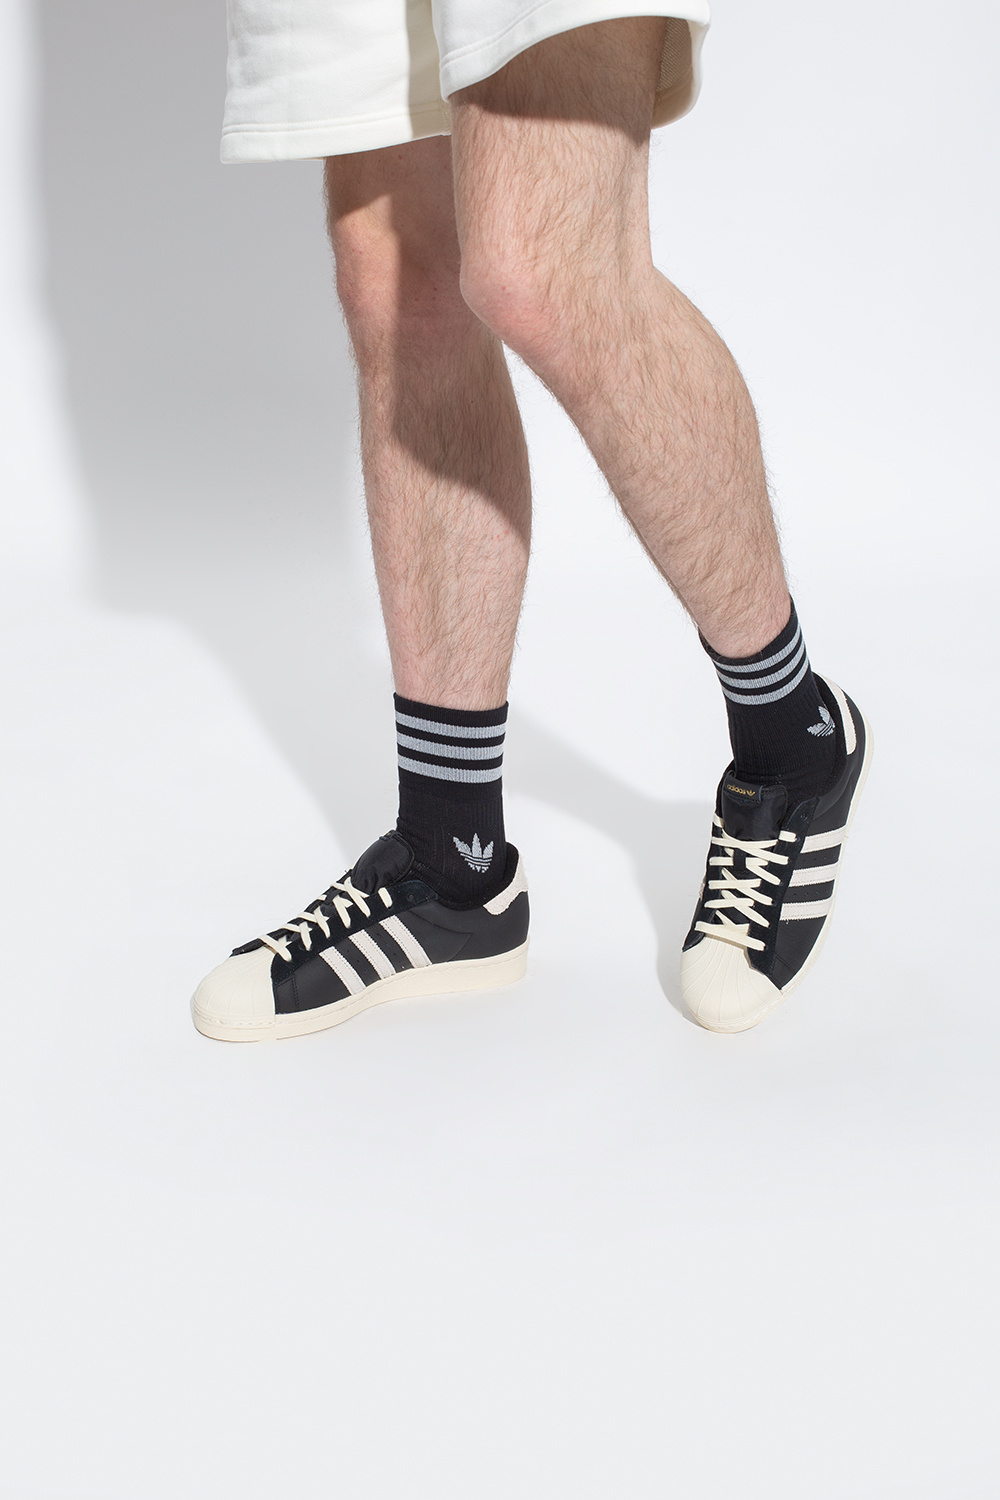 ADIDAS Originals 'Superstar 82' sneakers | Men's Shoes | Vitkac